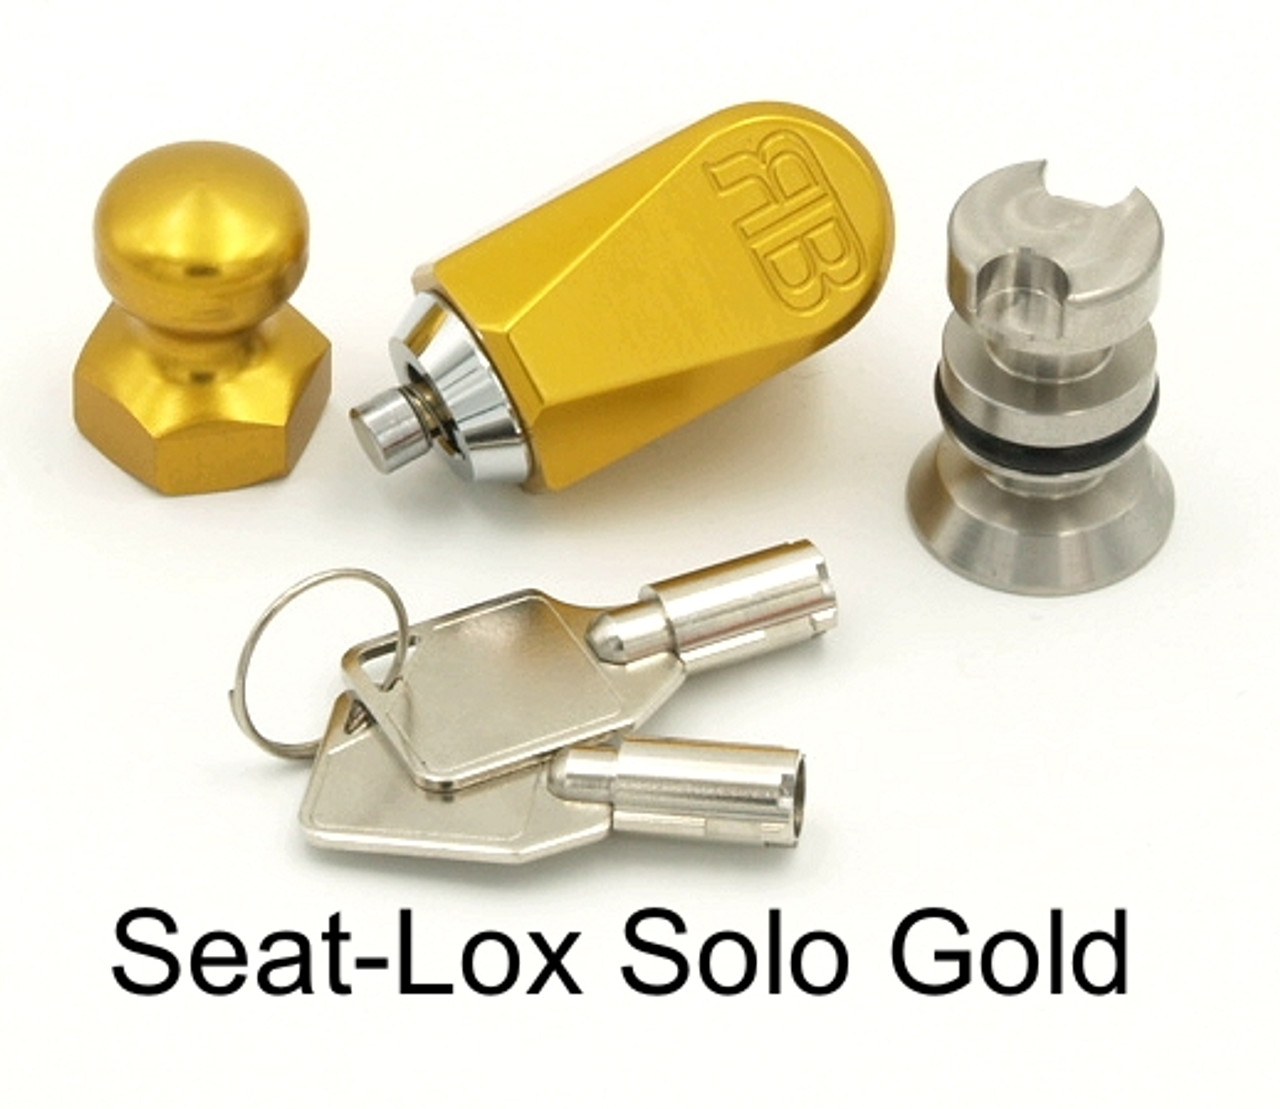 Solo seat lock gold anodized finish